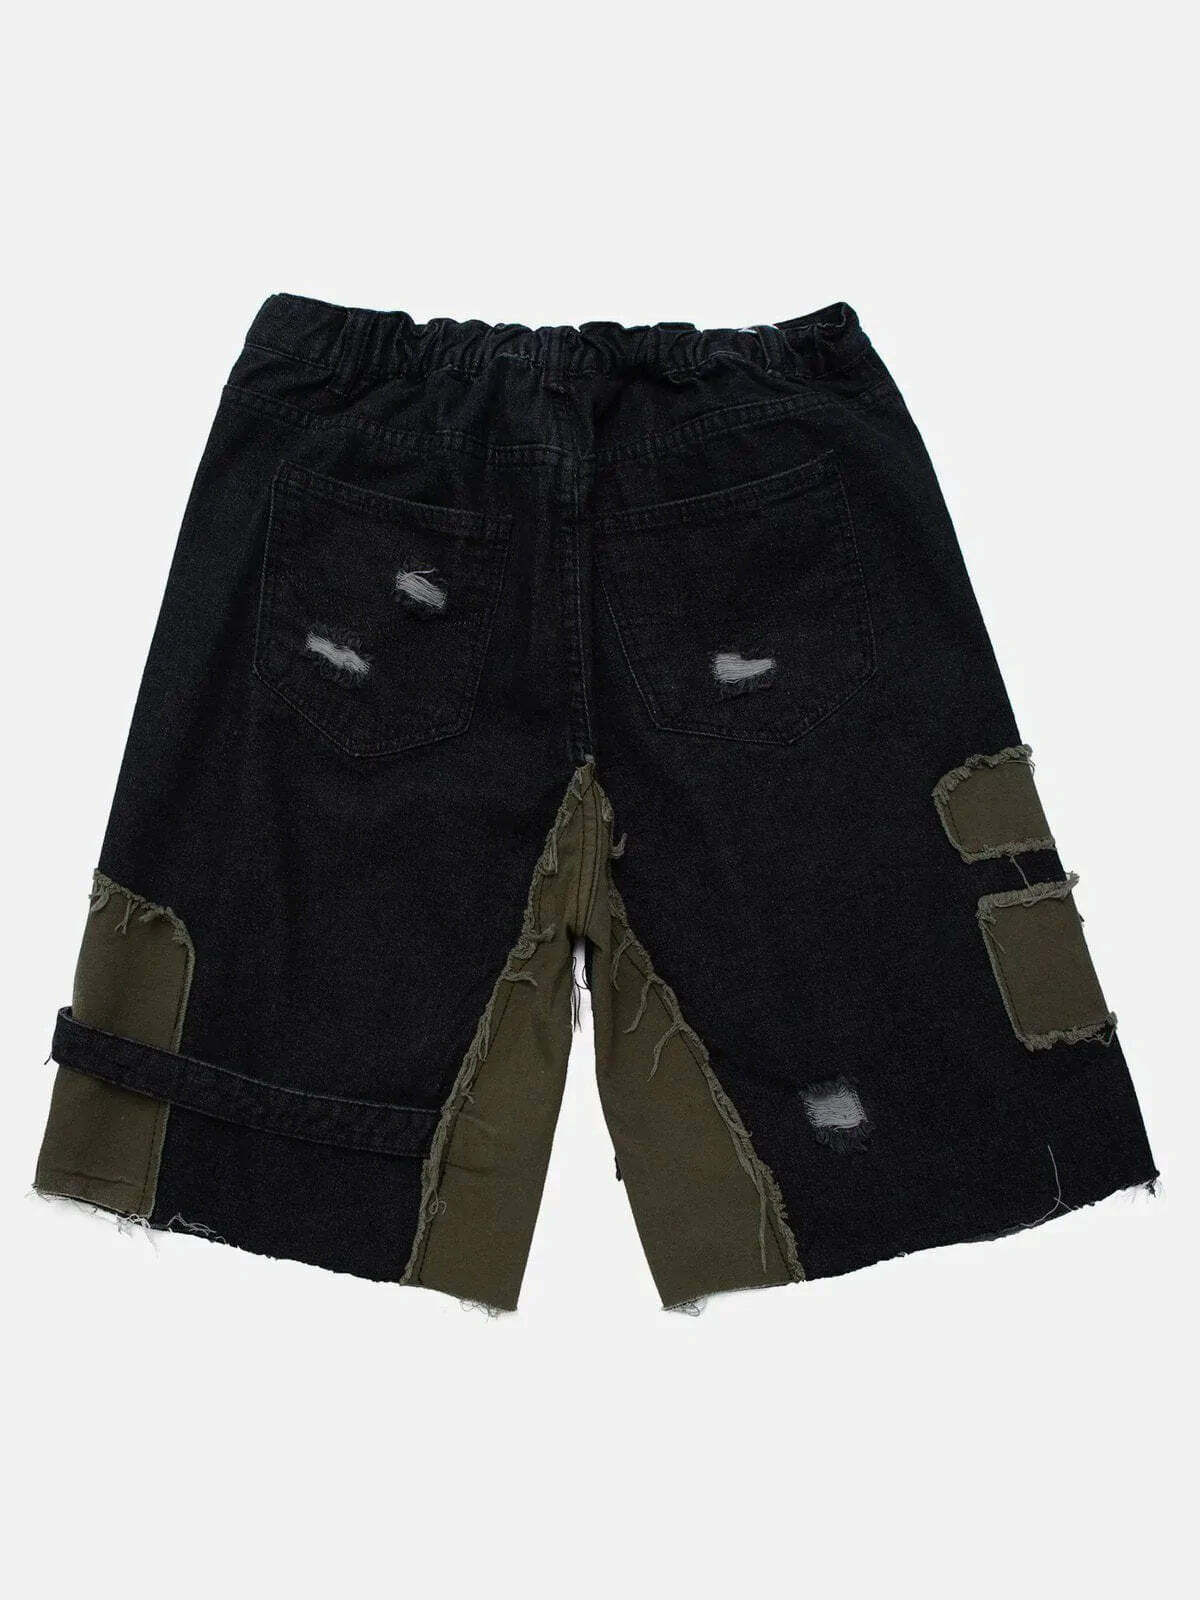 distressed denim shorts edgy urban essential 8591